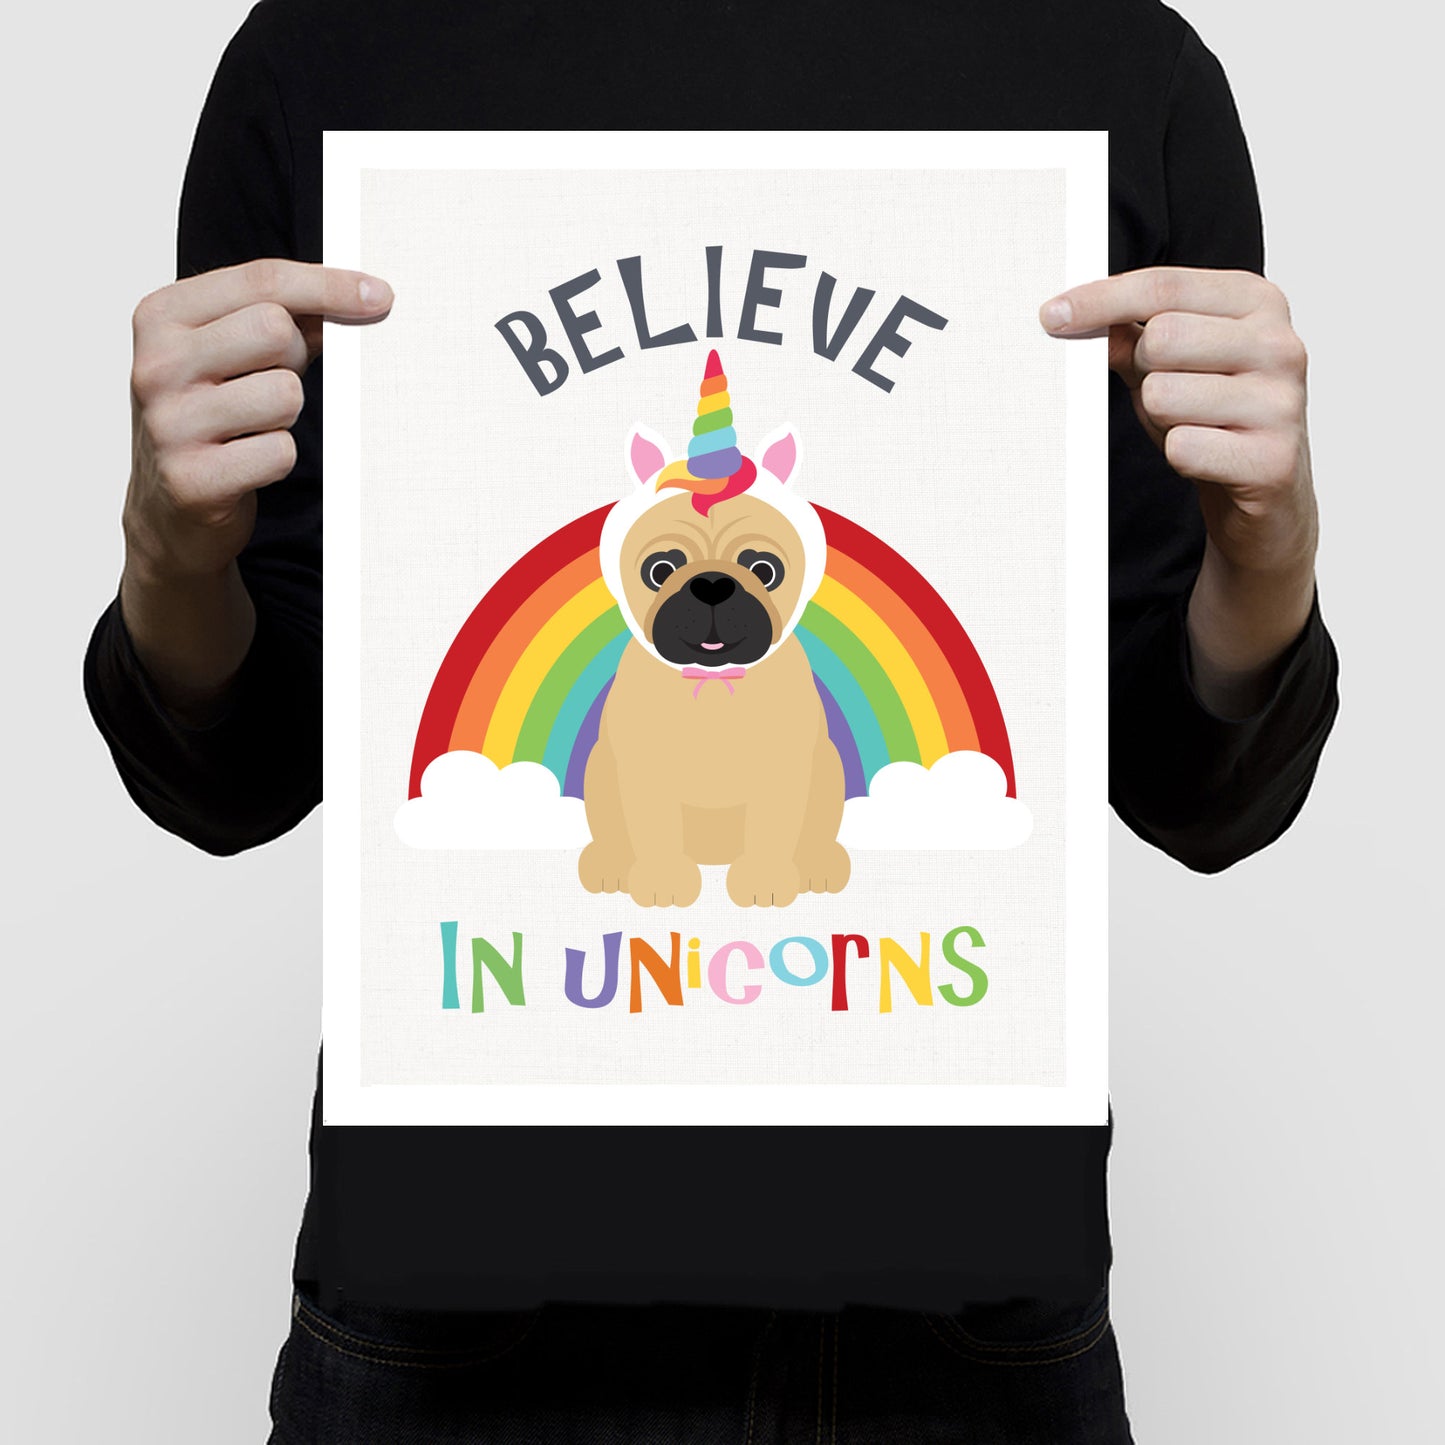 Believe in unicorns pug print